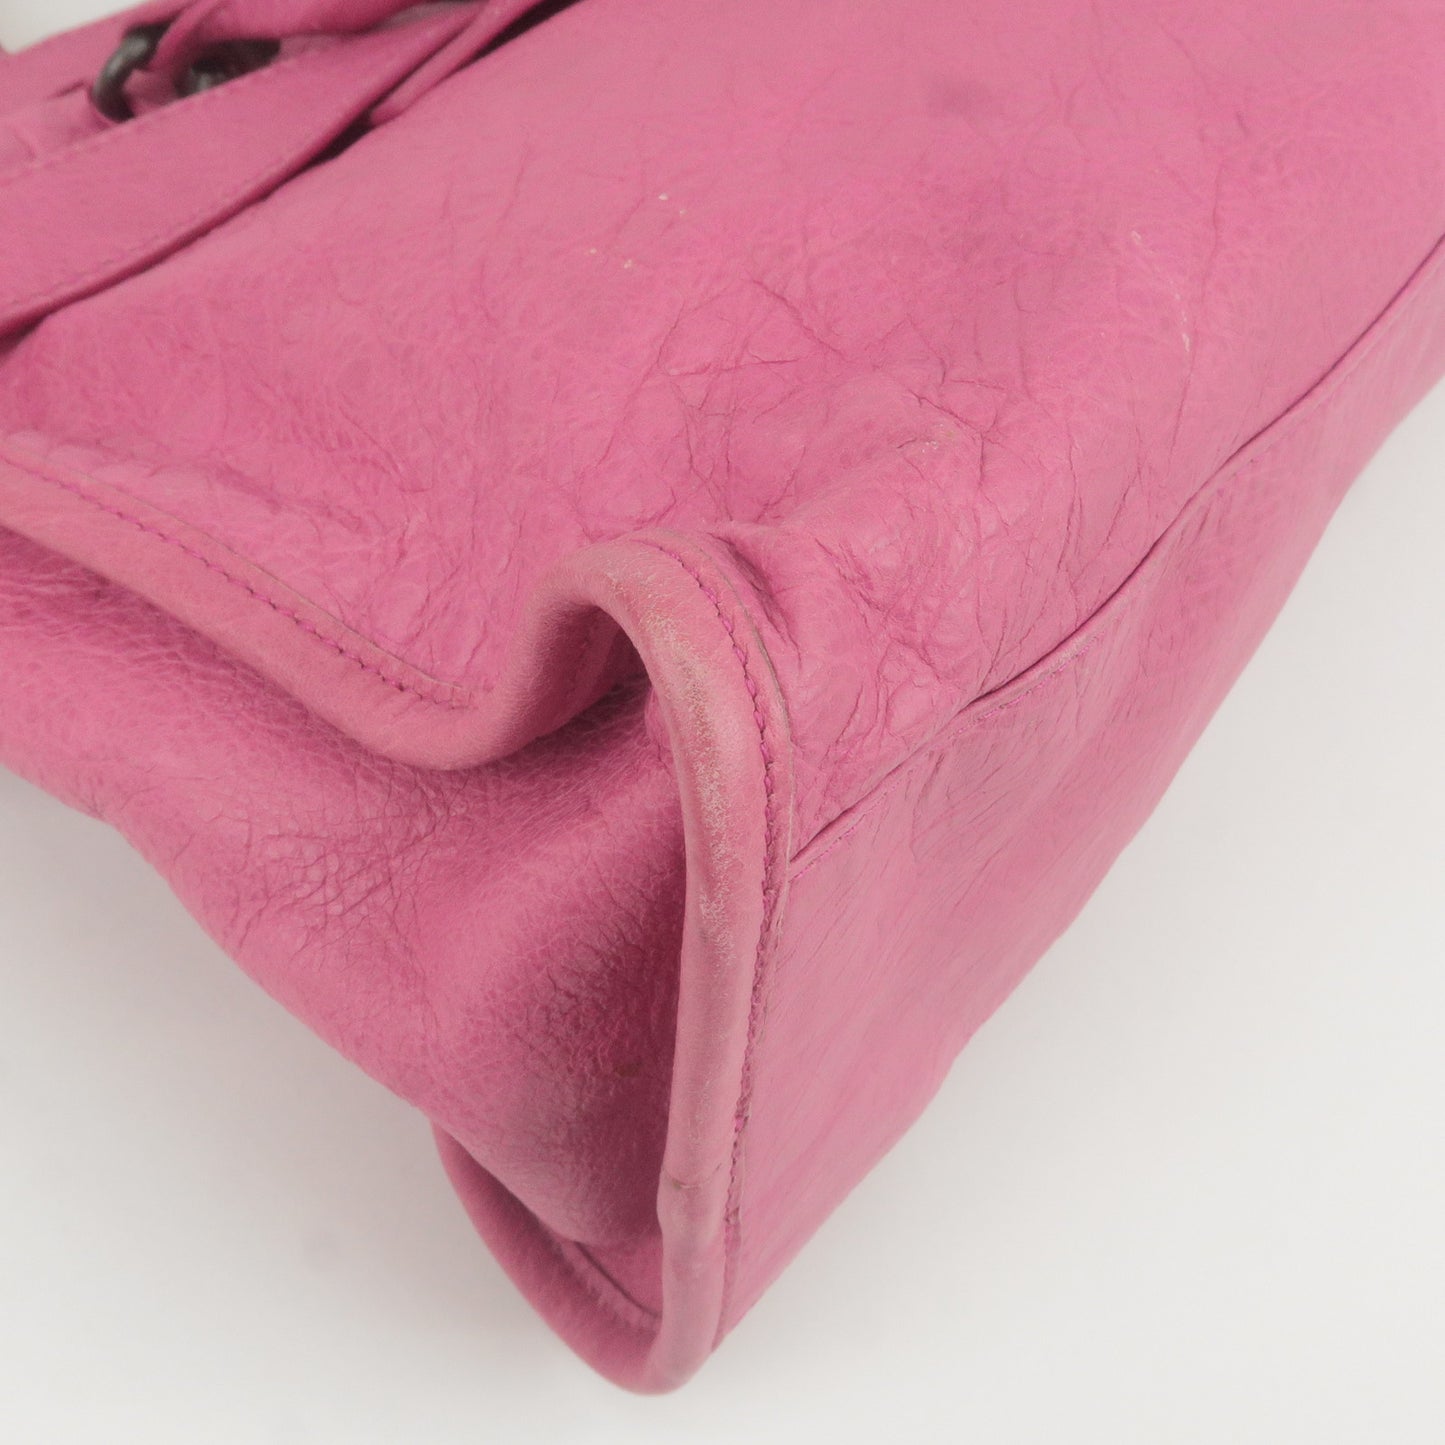 BALENCIAGA-The-City-Leather-2Way-Bag-Hand-Bag-Pink-115748 – dct